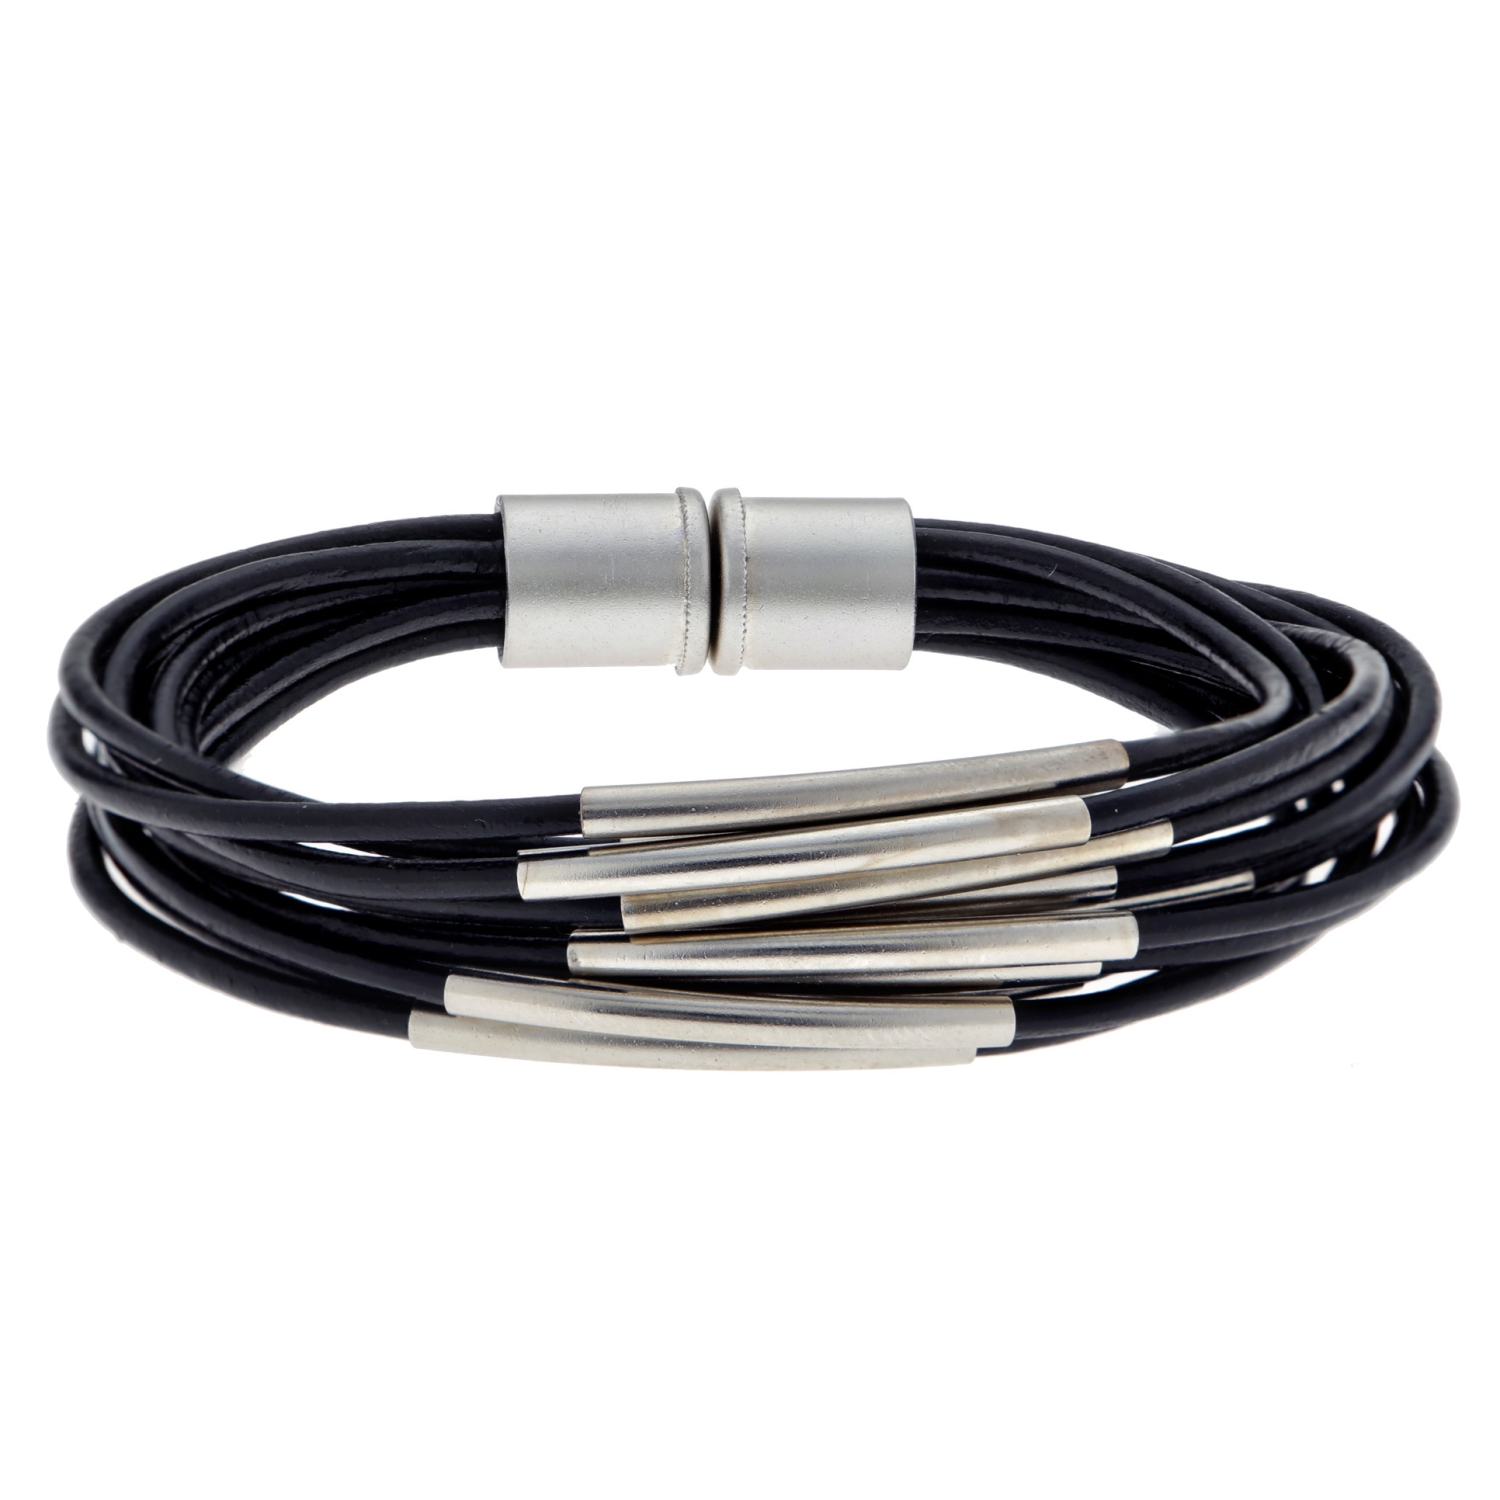 Hagar Satat Leather Silver Plated Multi-String Tubes Bracelet - Black - 1